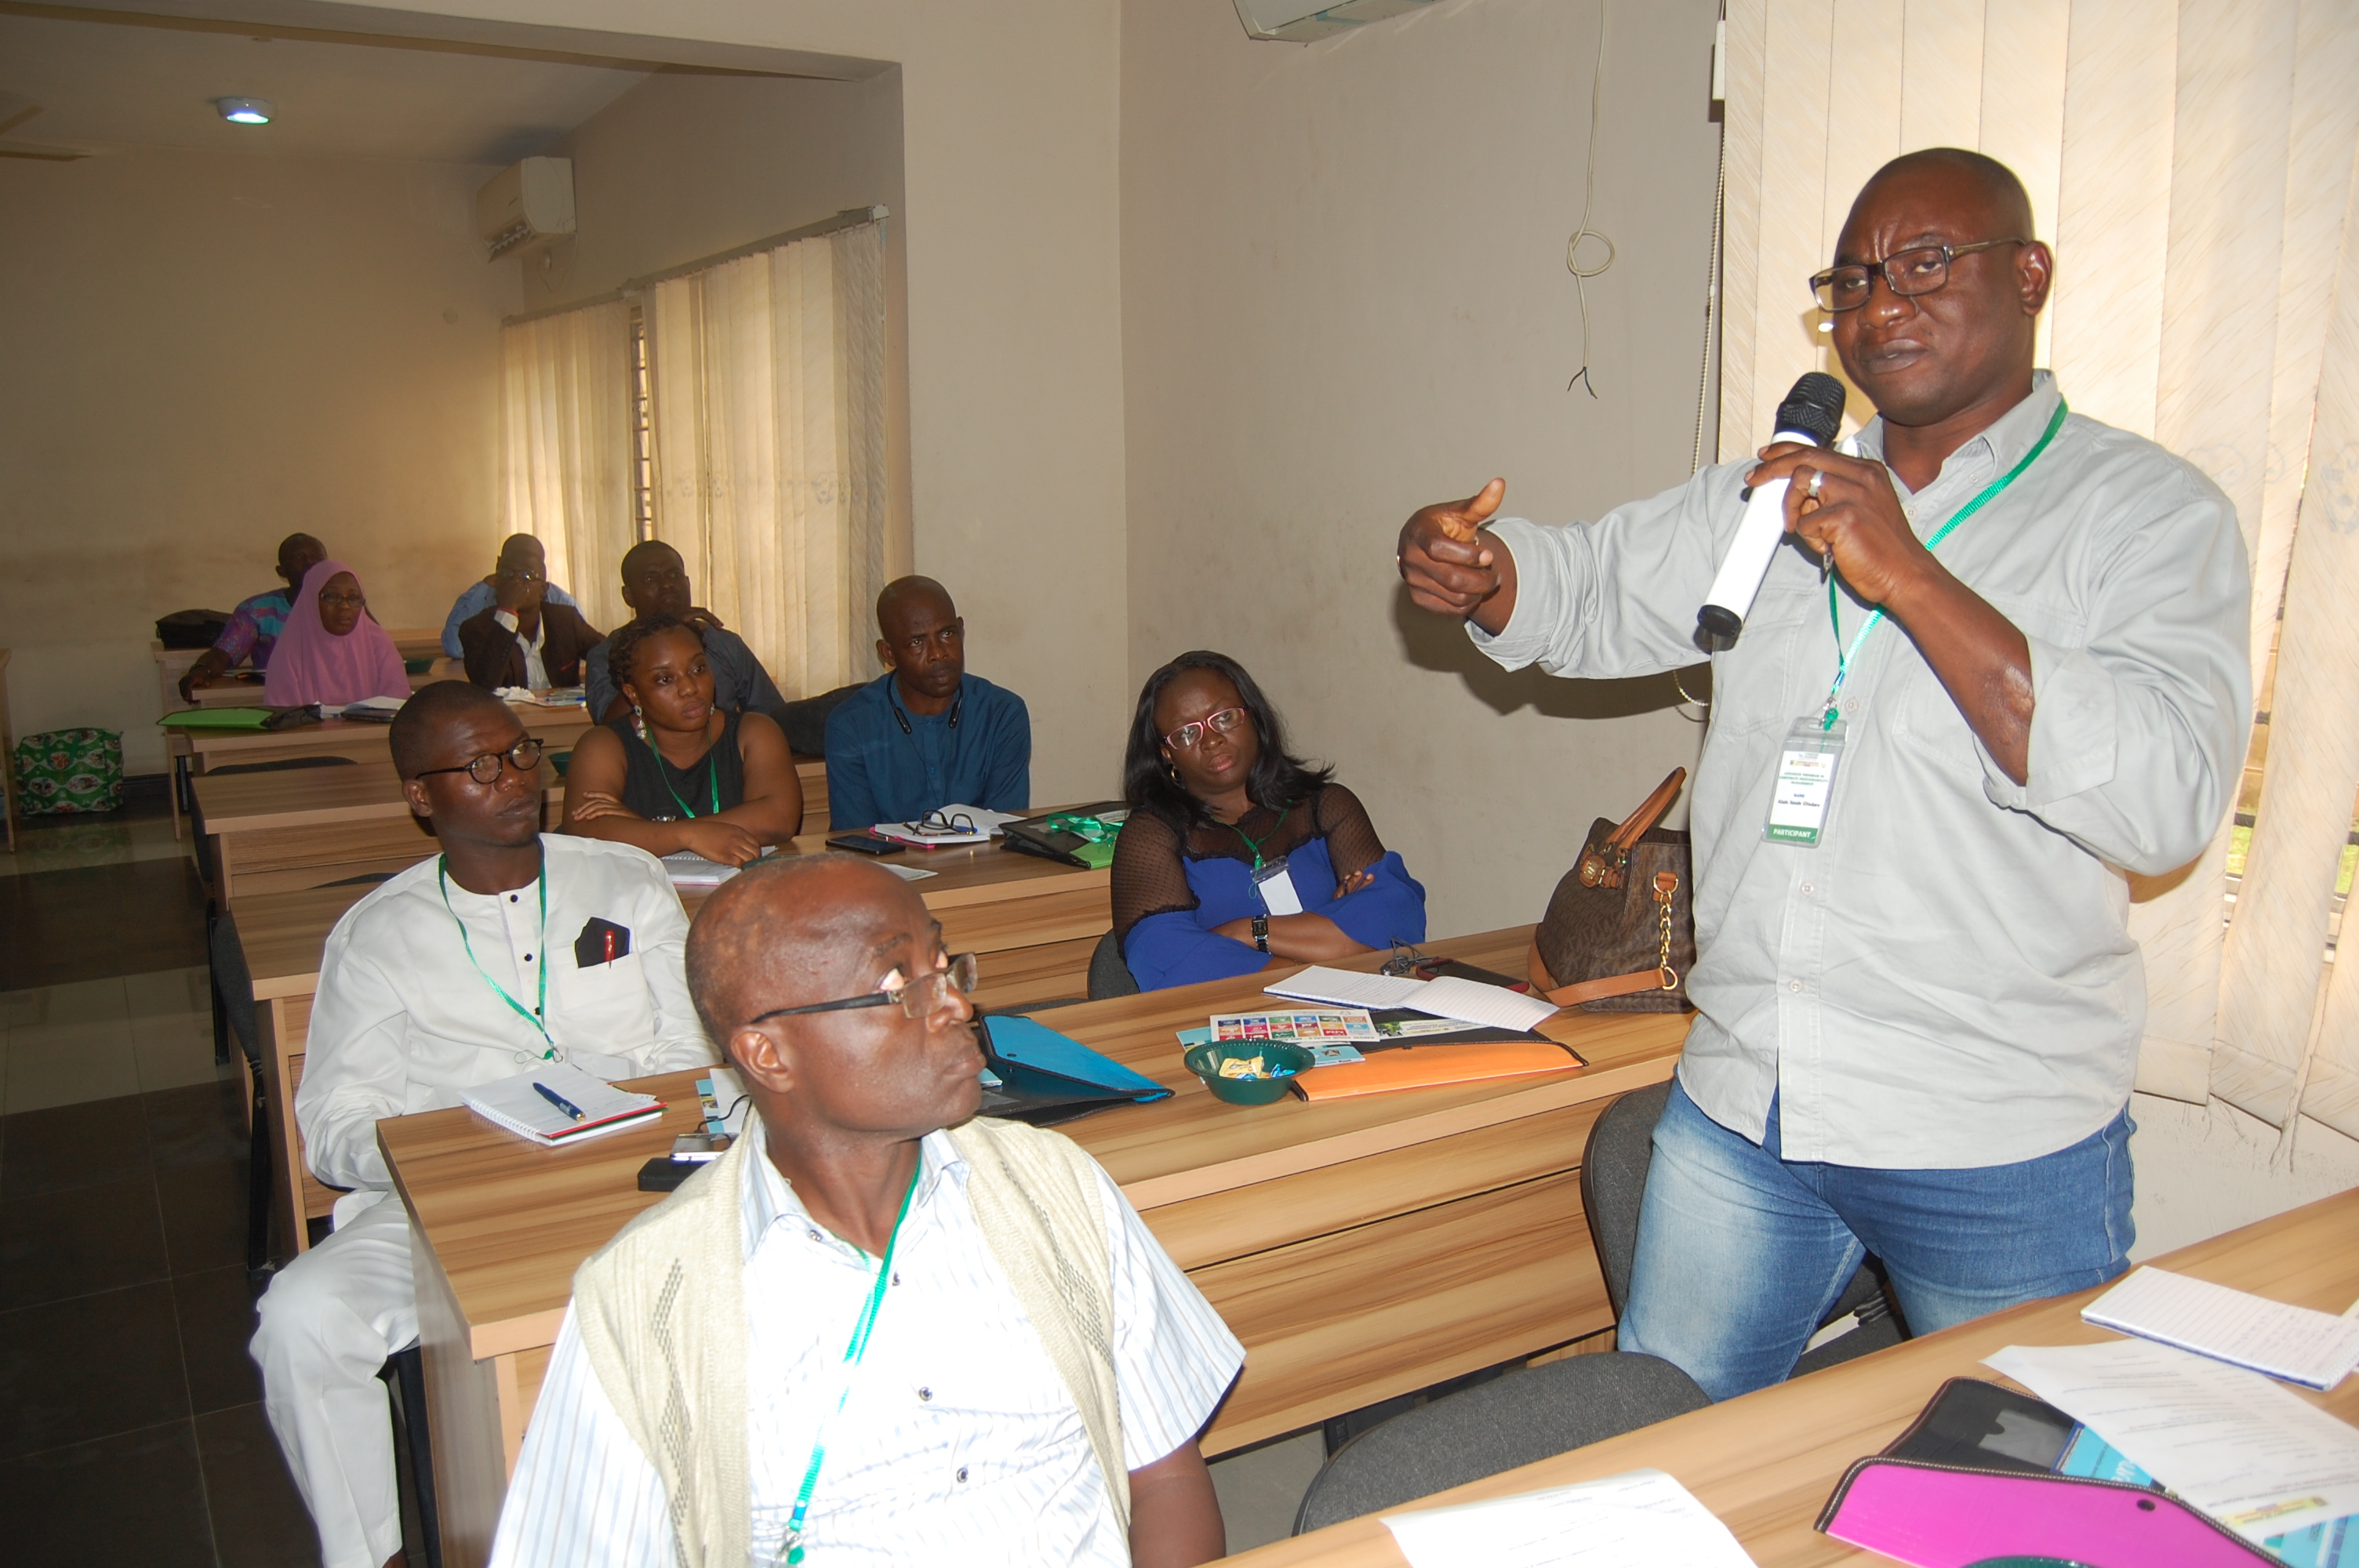 Advanced Program in Corporate Sustainability Management, Ibadan – Day 1